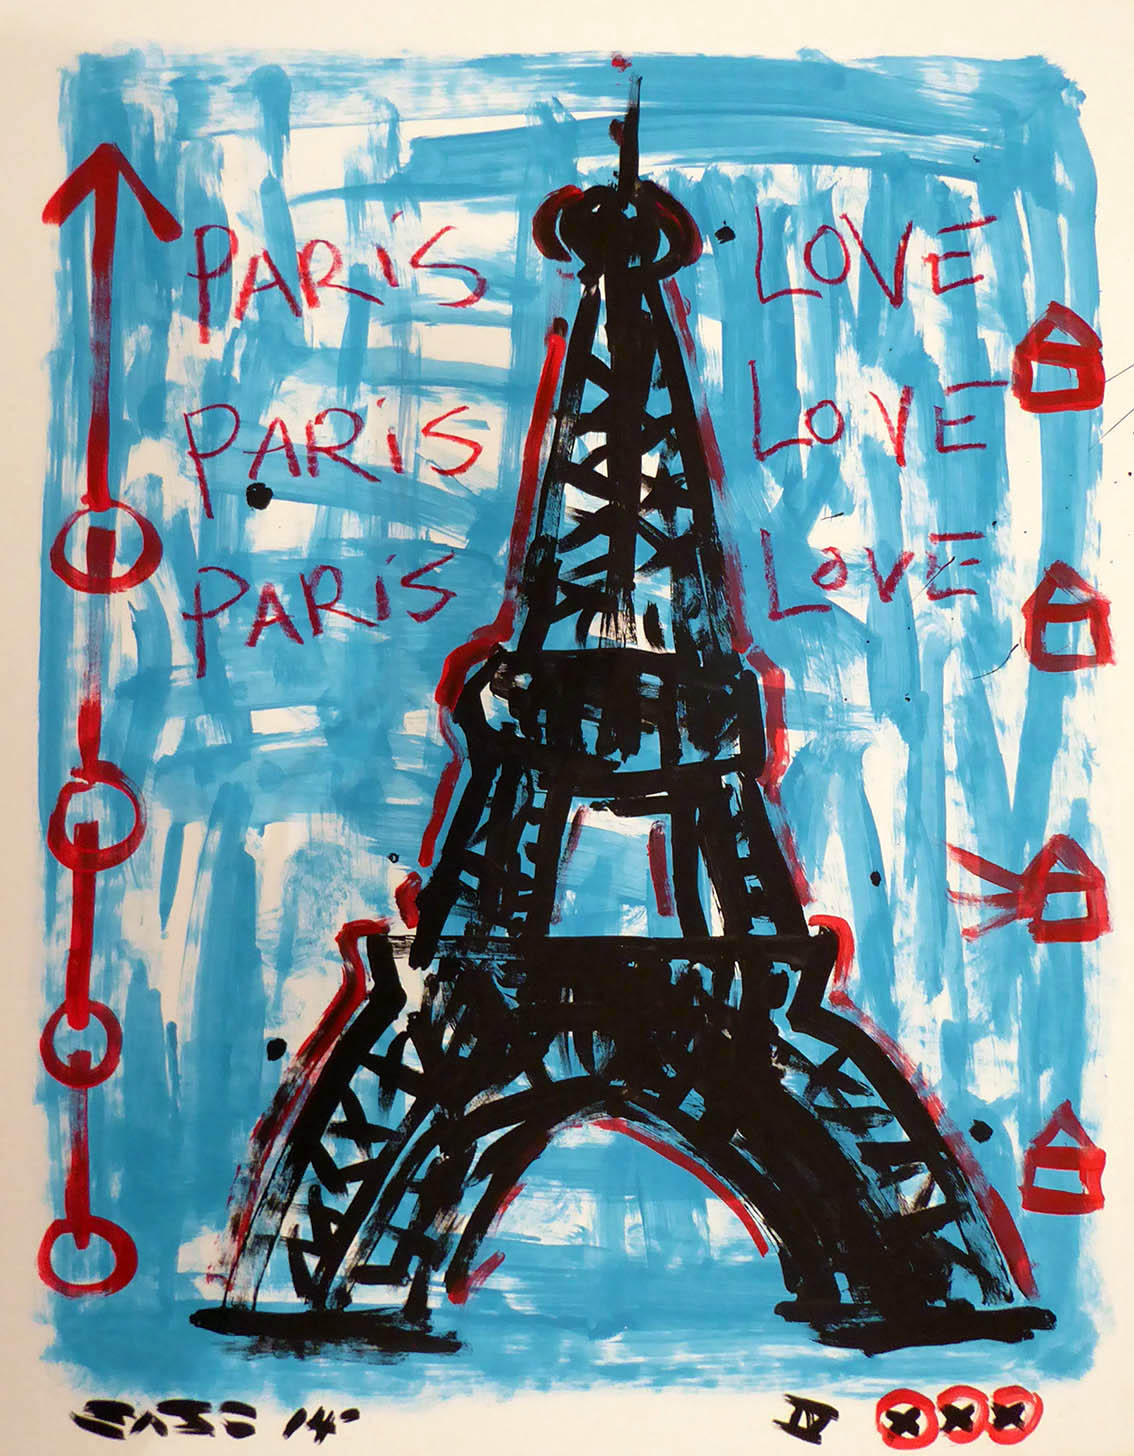 Gary John: Tour Eiffel